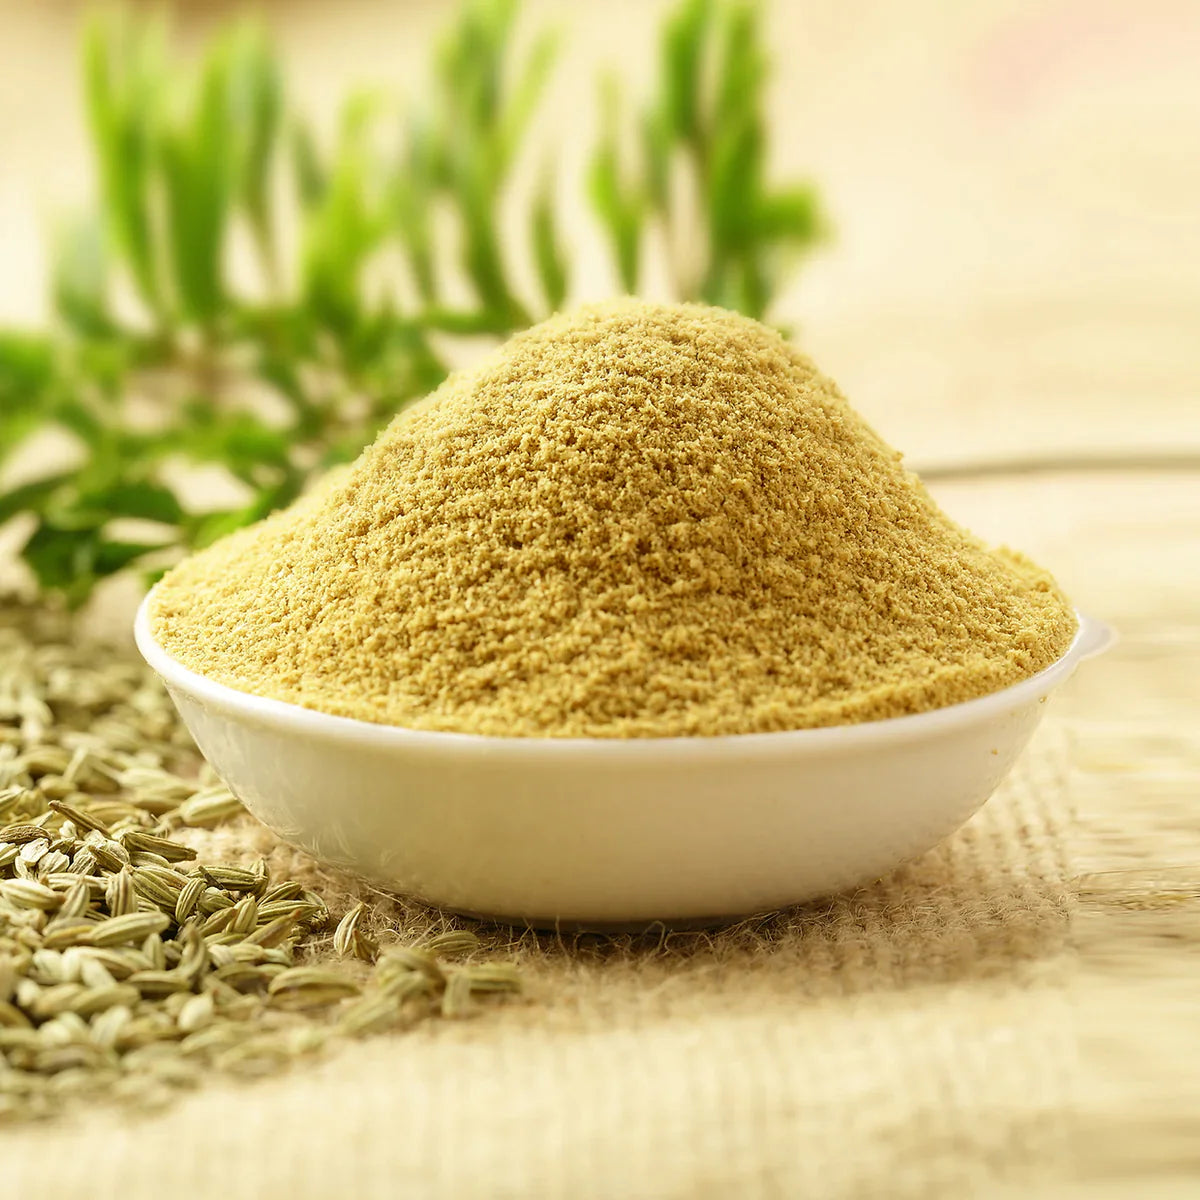 Fennel Seed Powder Benefits: Top Benefits of Fennel Seed Powder